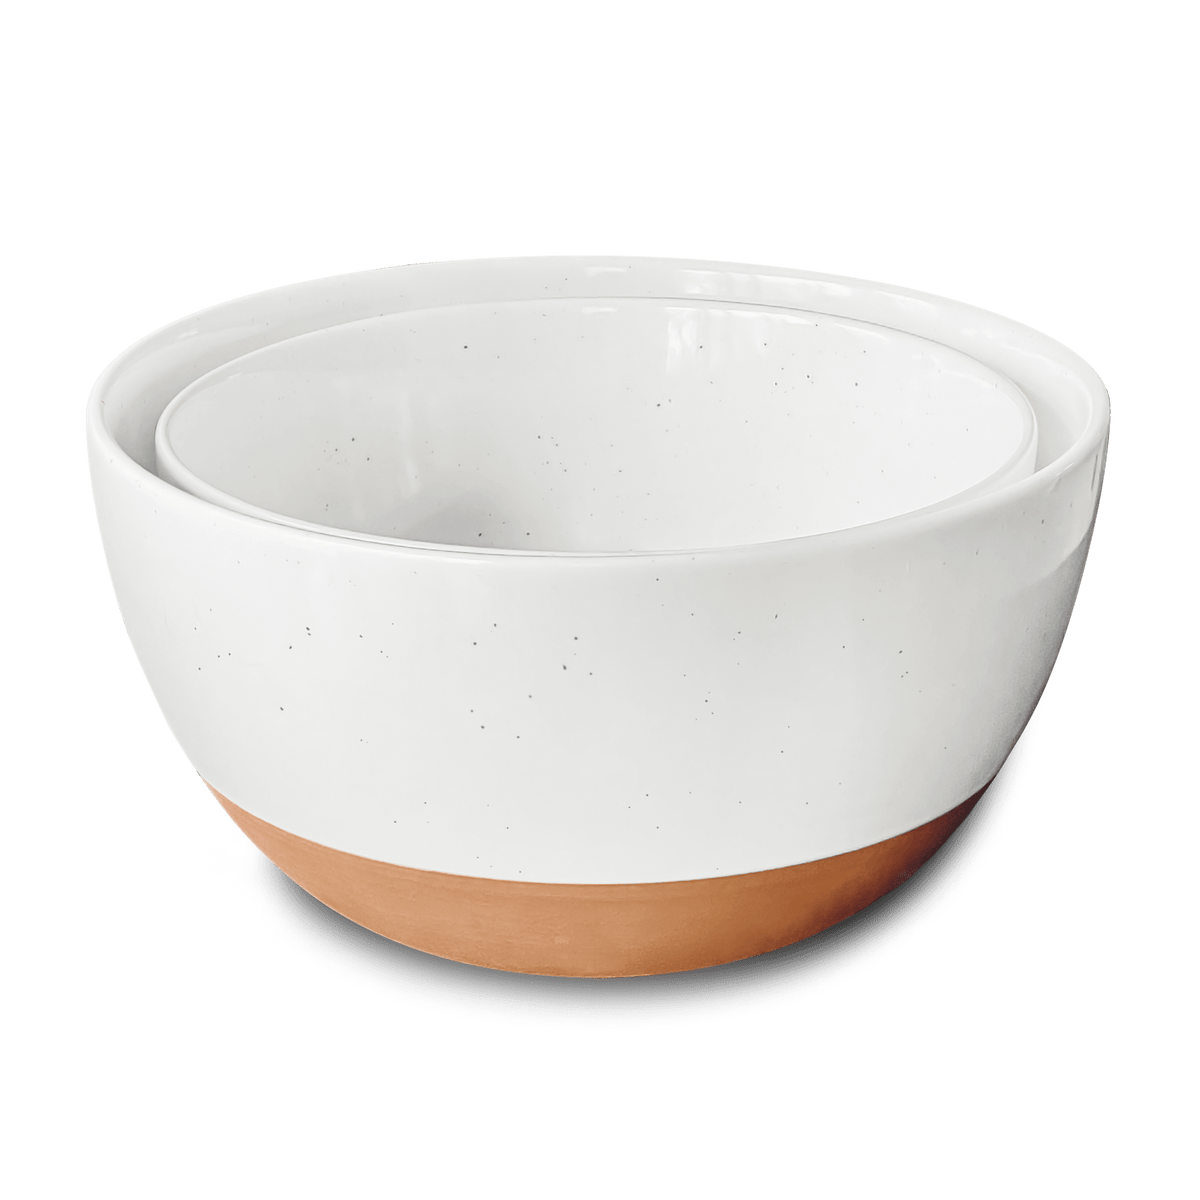 Mora Ceramic Large Mixing Bowls - Set of 2 Nesting 5.5 & 3.6 qt Vanilla  White